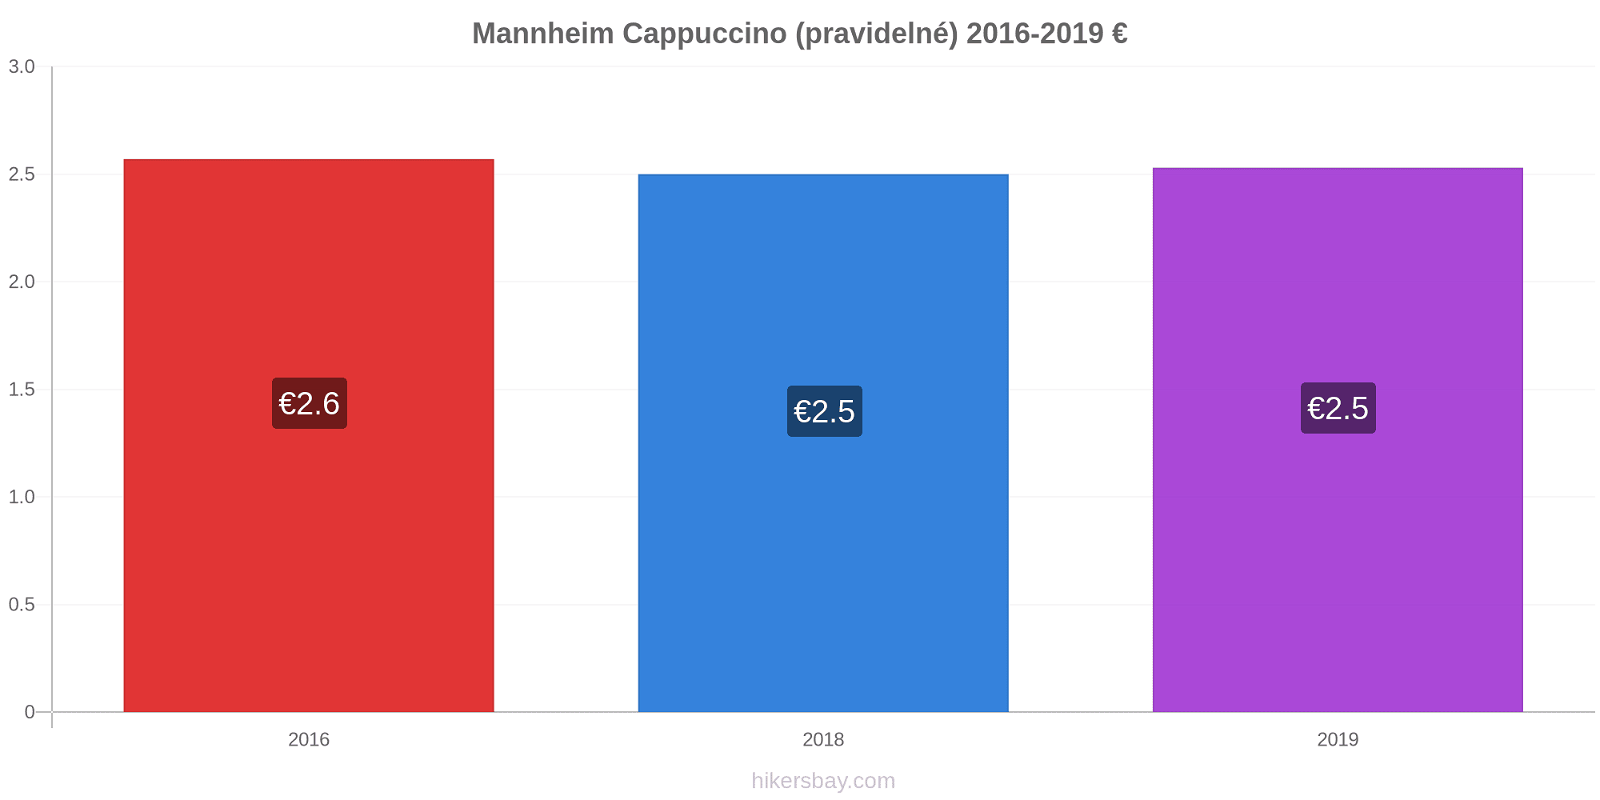 Mannheim změny cen Cappuccino (pravidelné) hikersbay.com